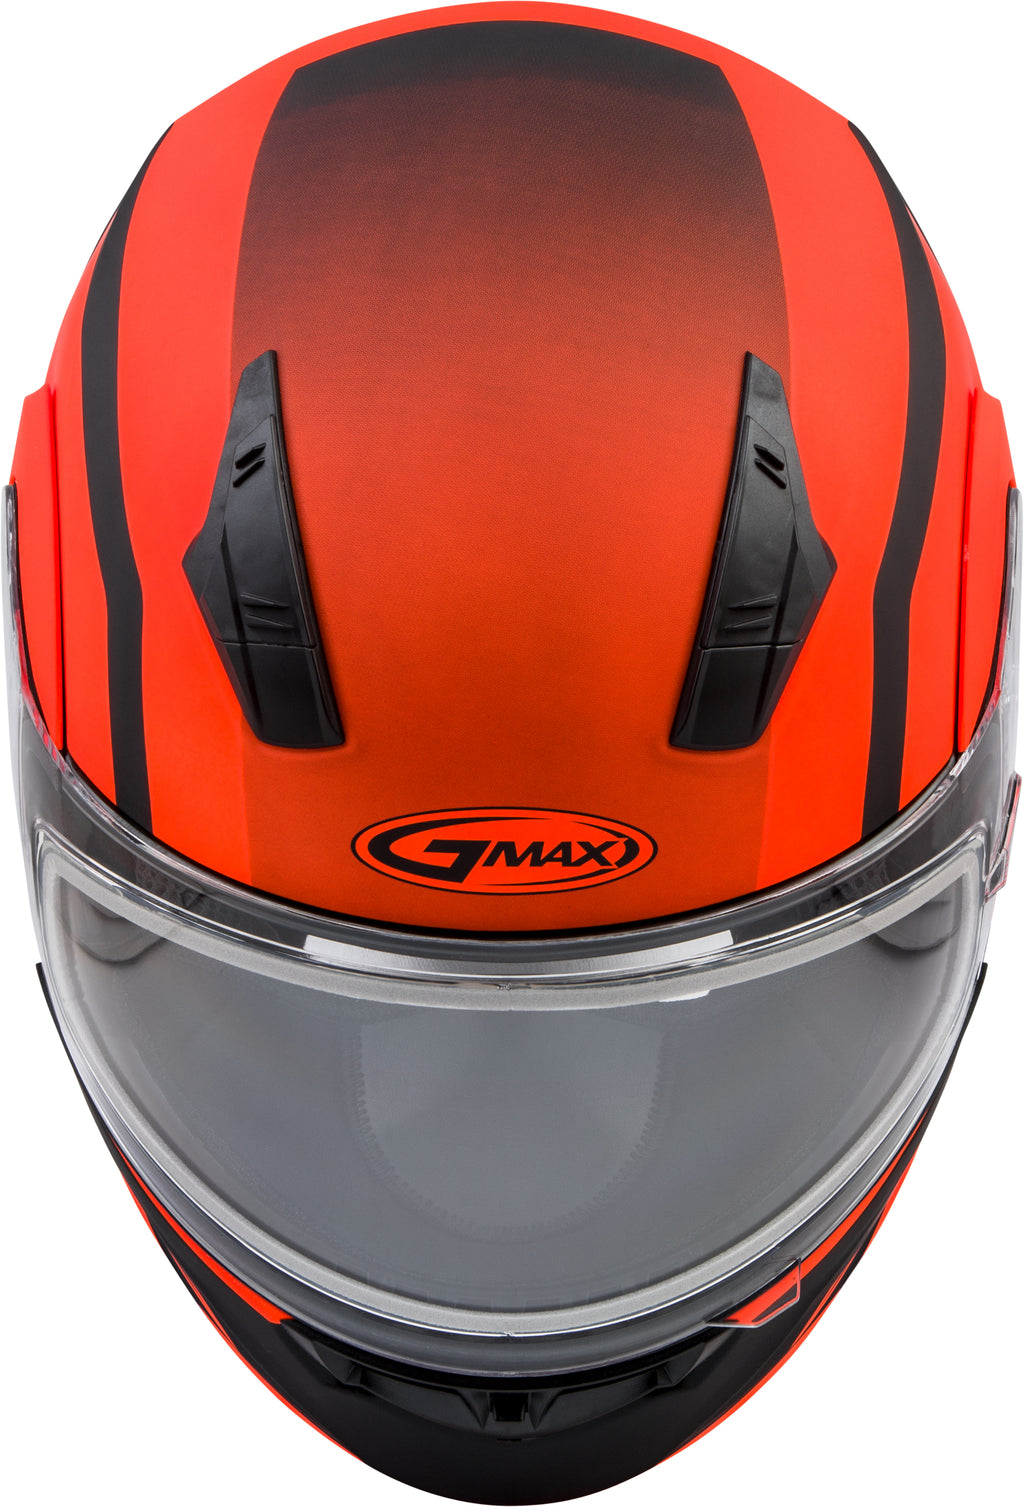 Md 04s Modular Docket Snow Helmet Matte Neon Org/Blk Md